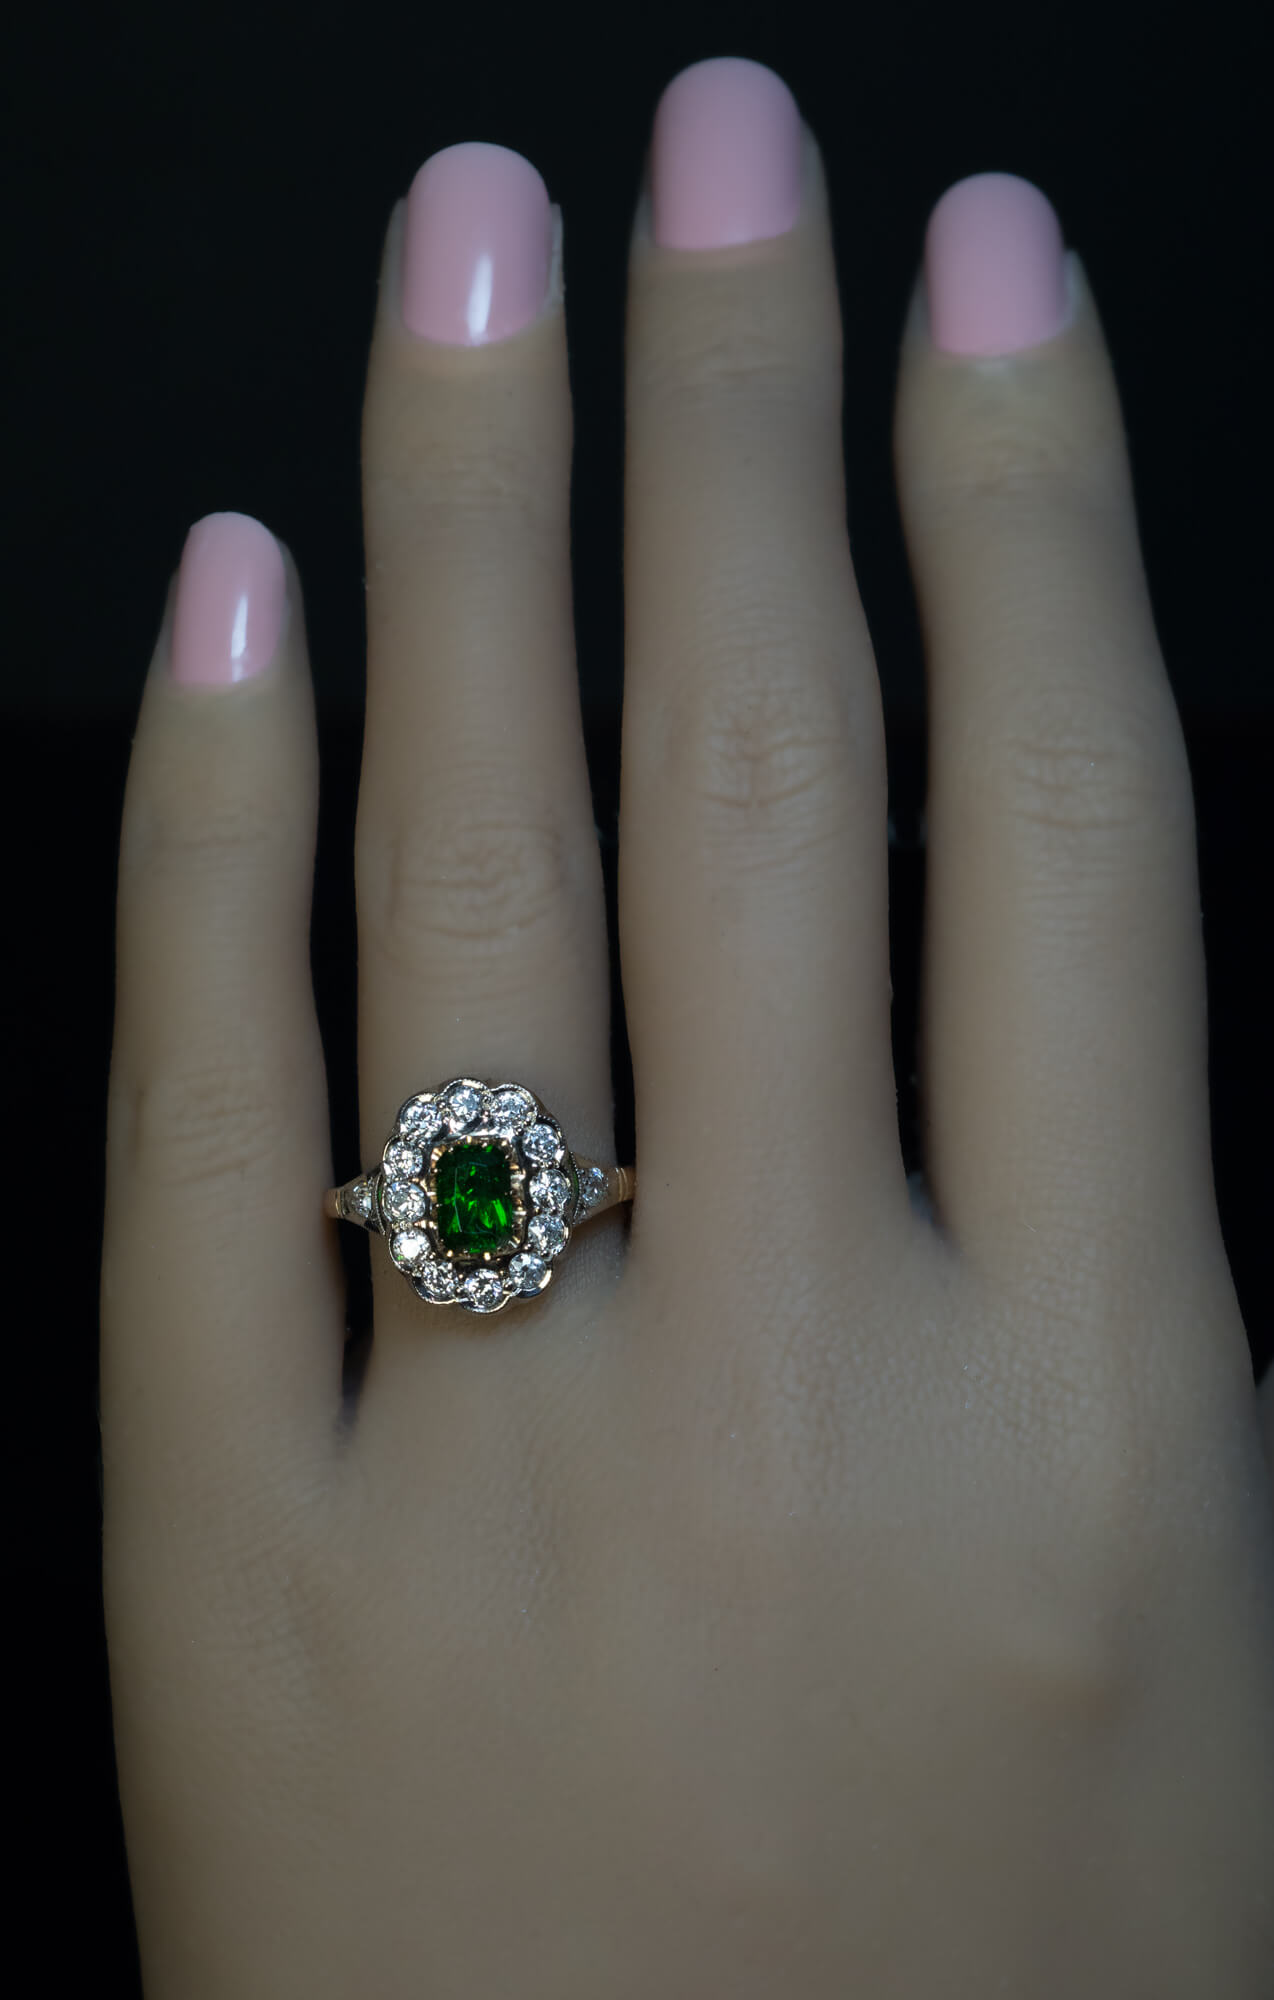 Vintage Russian Demantoid Diamond Engagement Ring Ref: 897087 - Antique ...